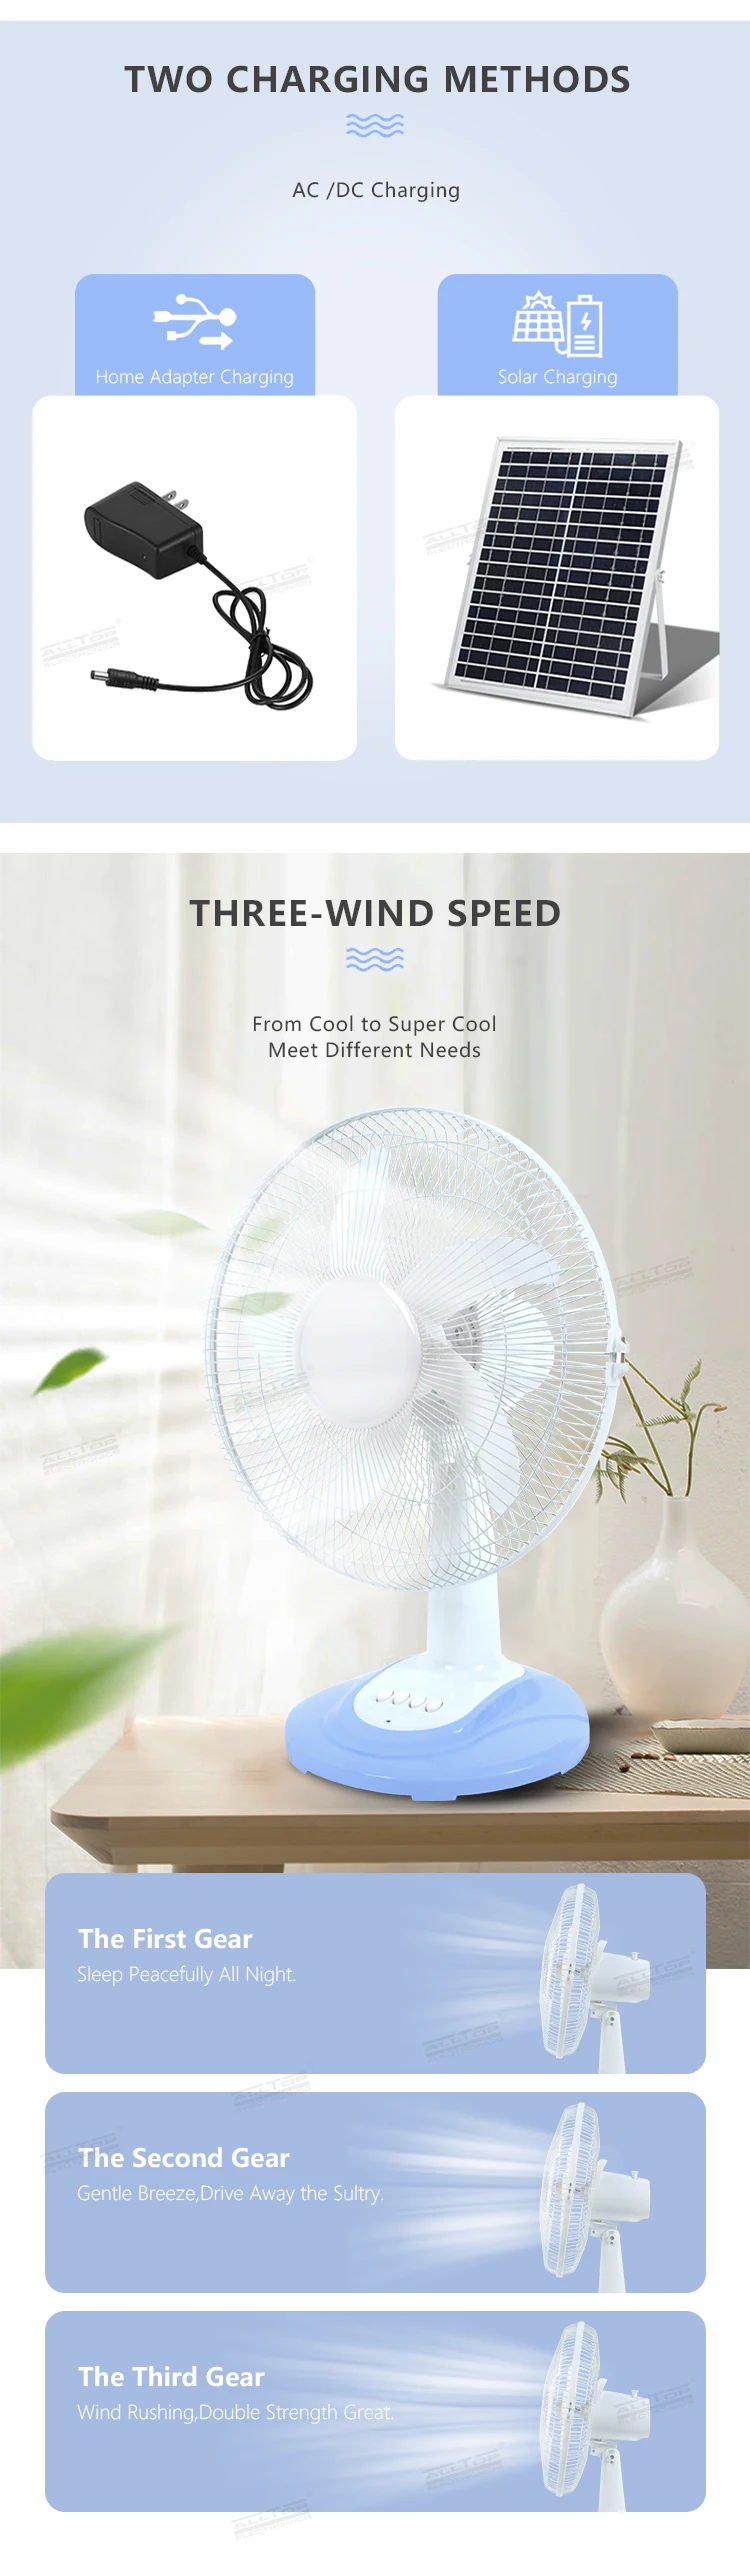 ALLTOP High quality motor safety air circulation fan three wind speed five blades mini solar table fan